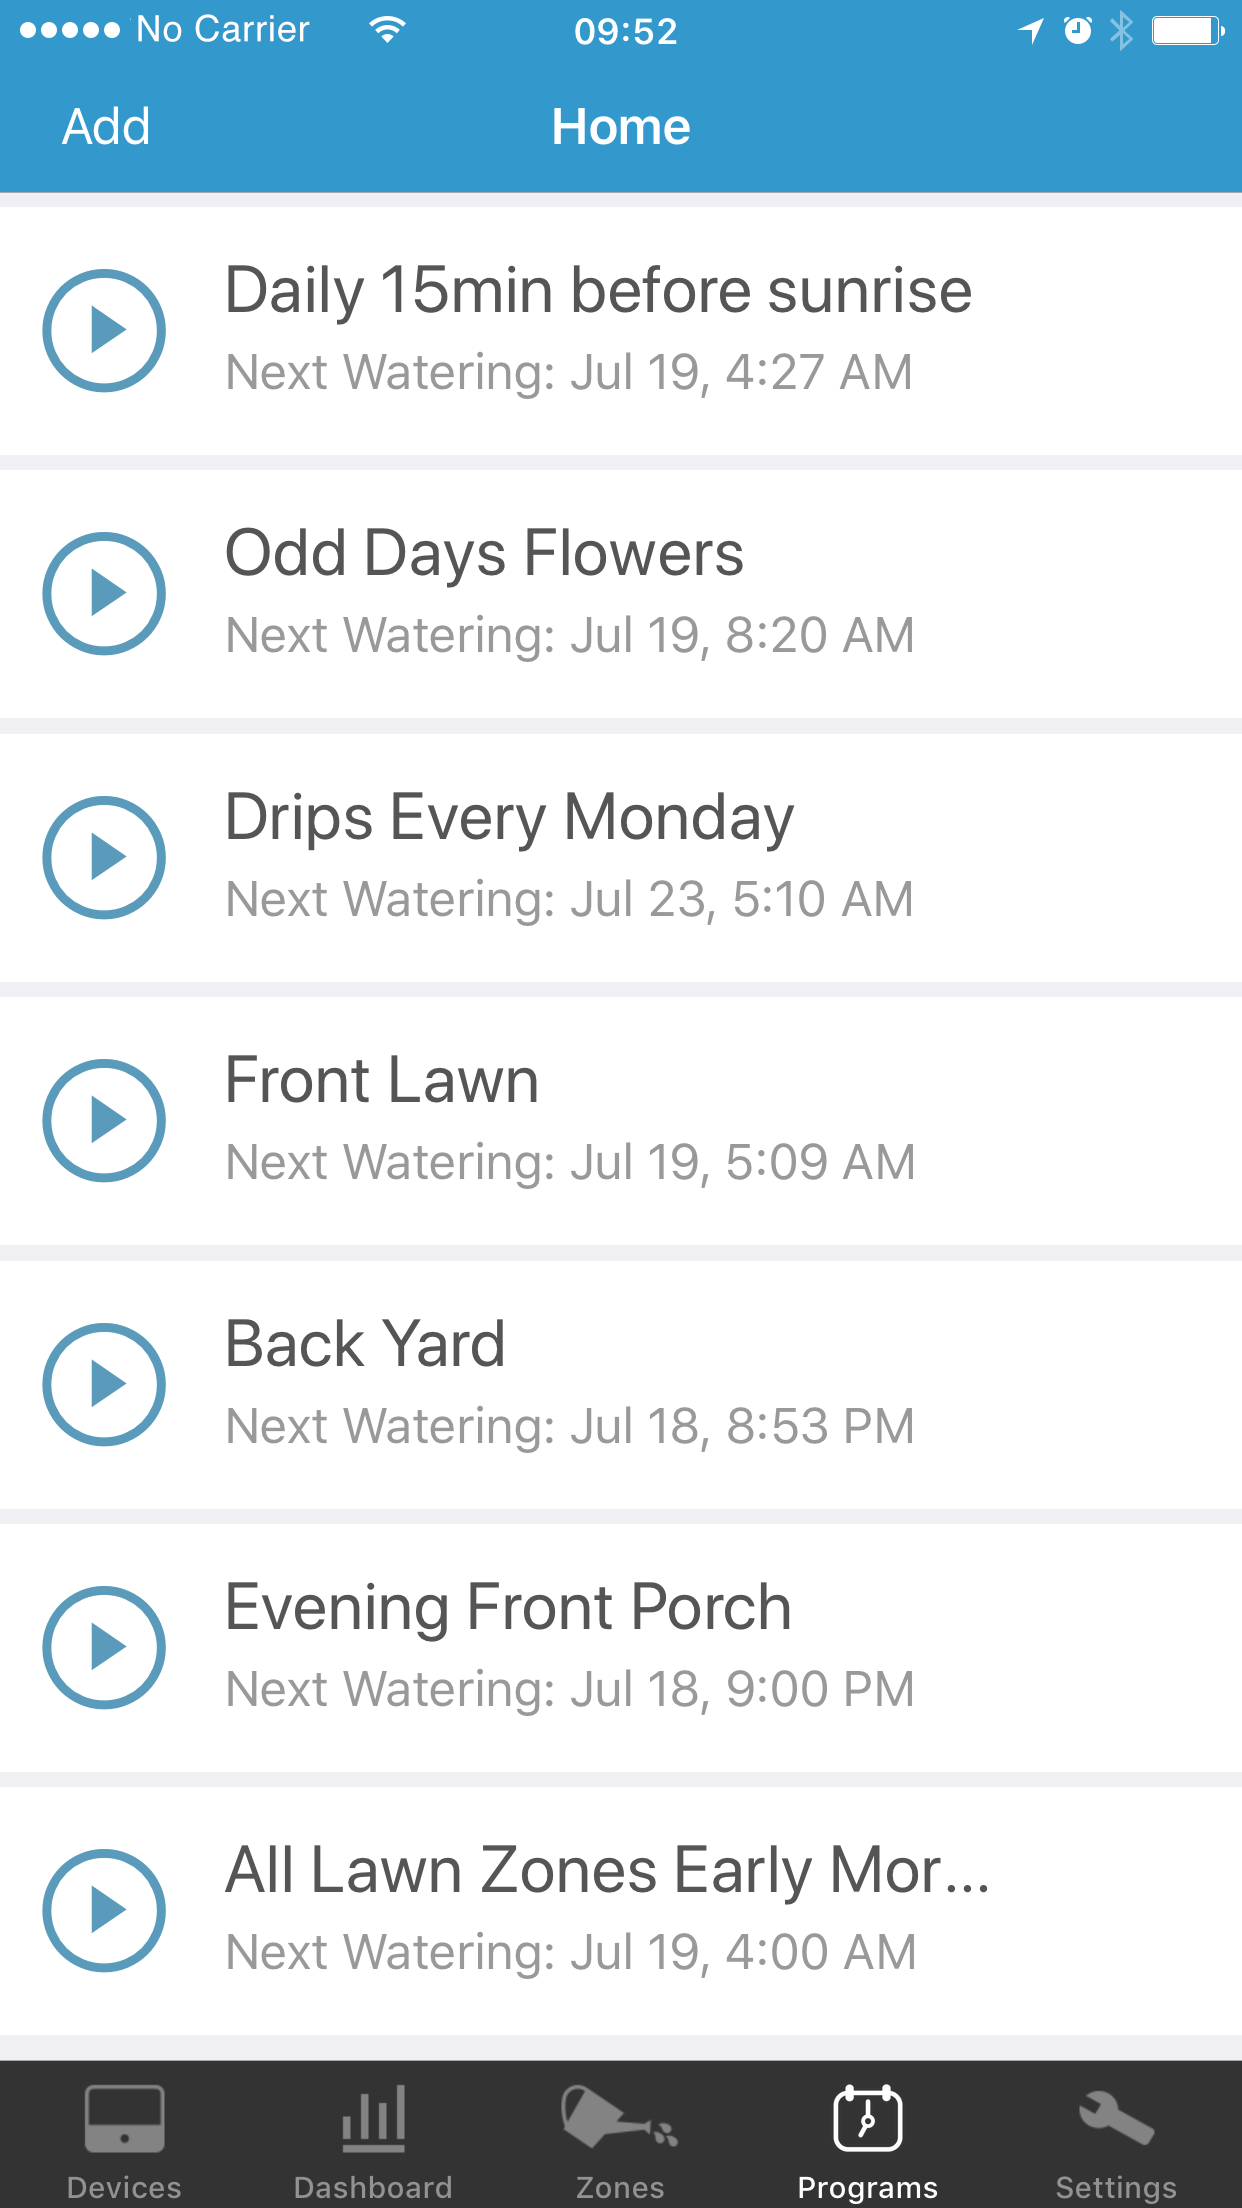 Programs screen of the RainMachine mobile application